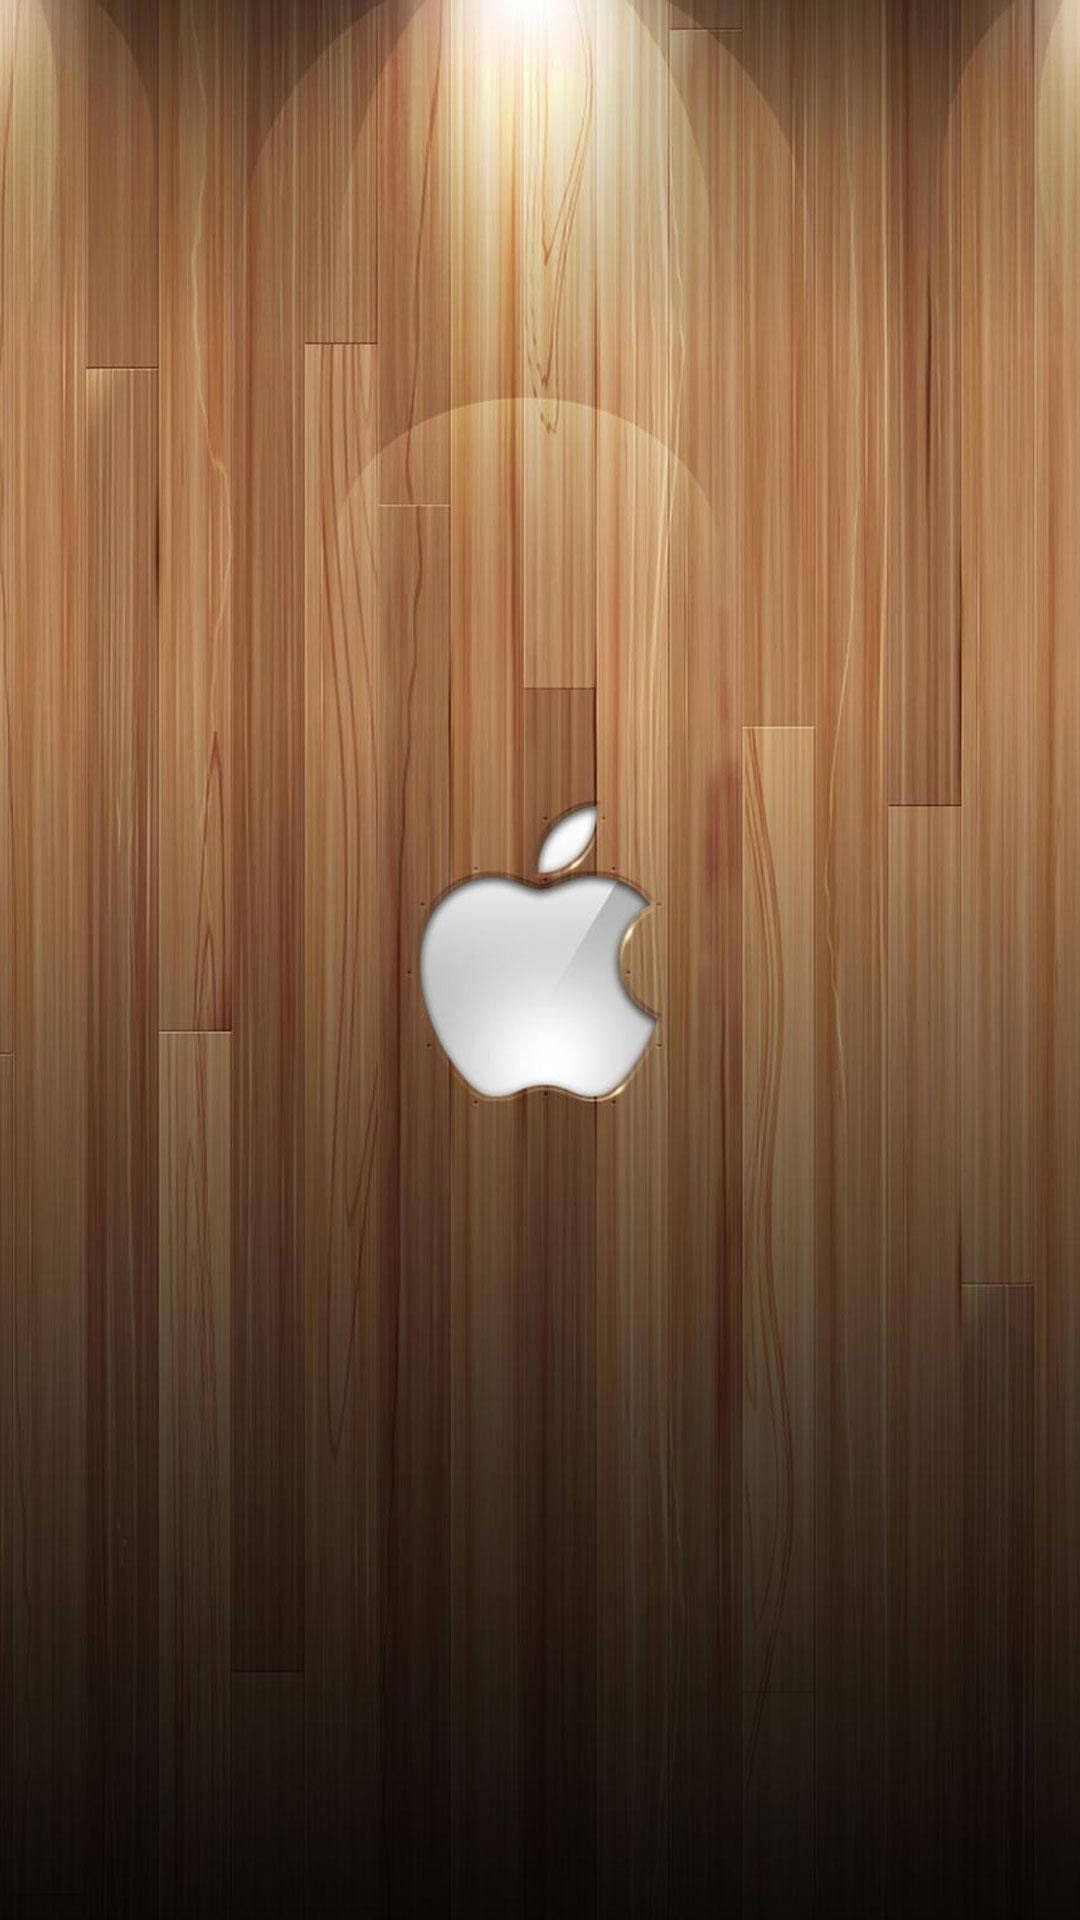 Silver Apple Logo Iphone 6s Plus